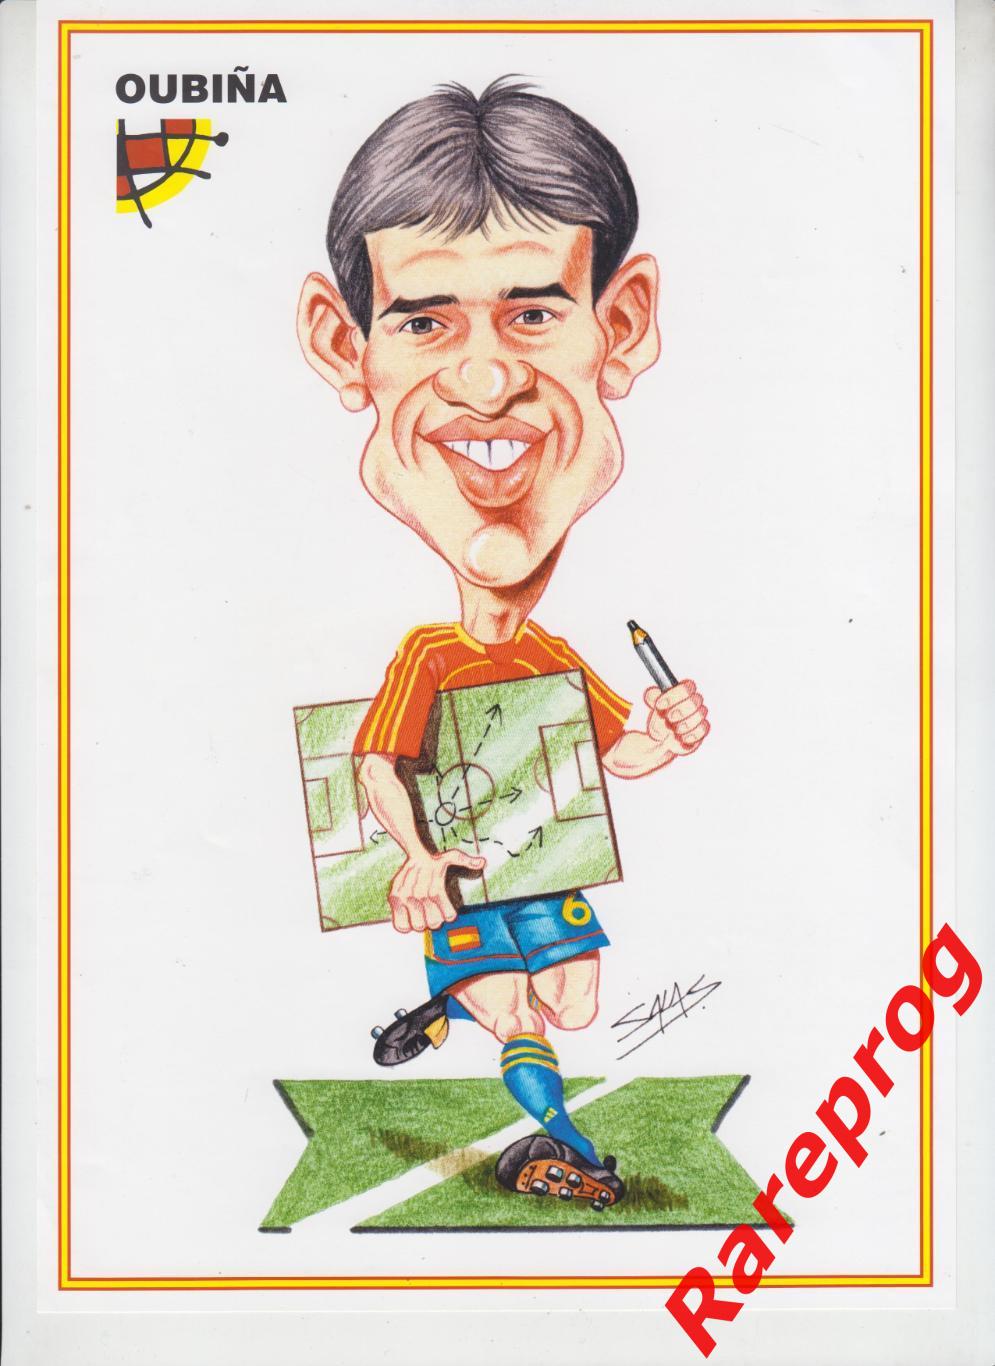 журнал Футбол RFEF Испания № 89 сентябрь 2006 - С. Ирландия отбор ЕВРО 08 отчет 1